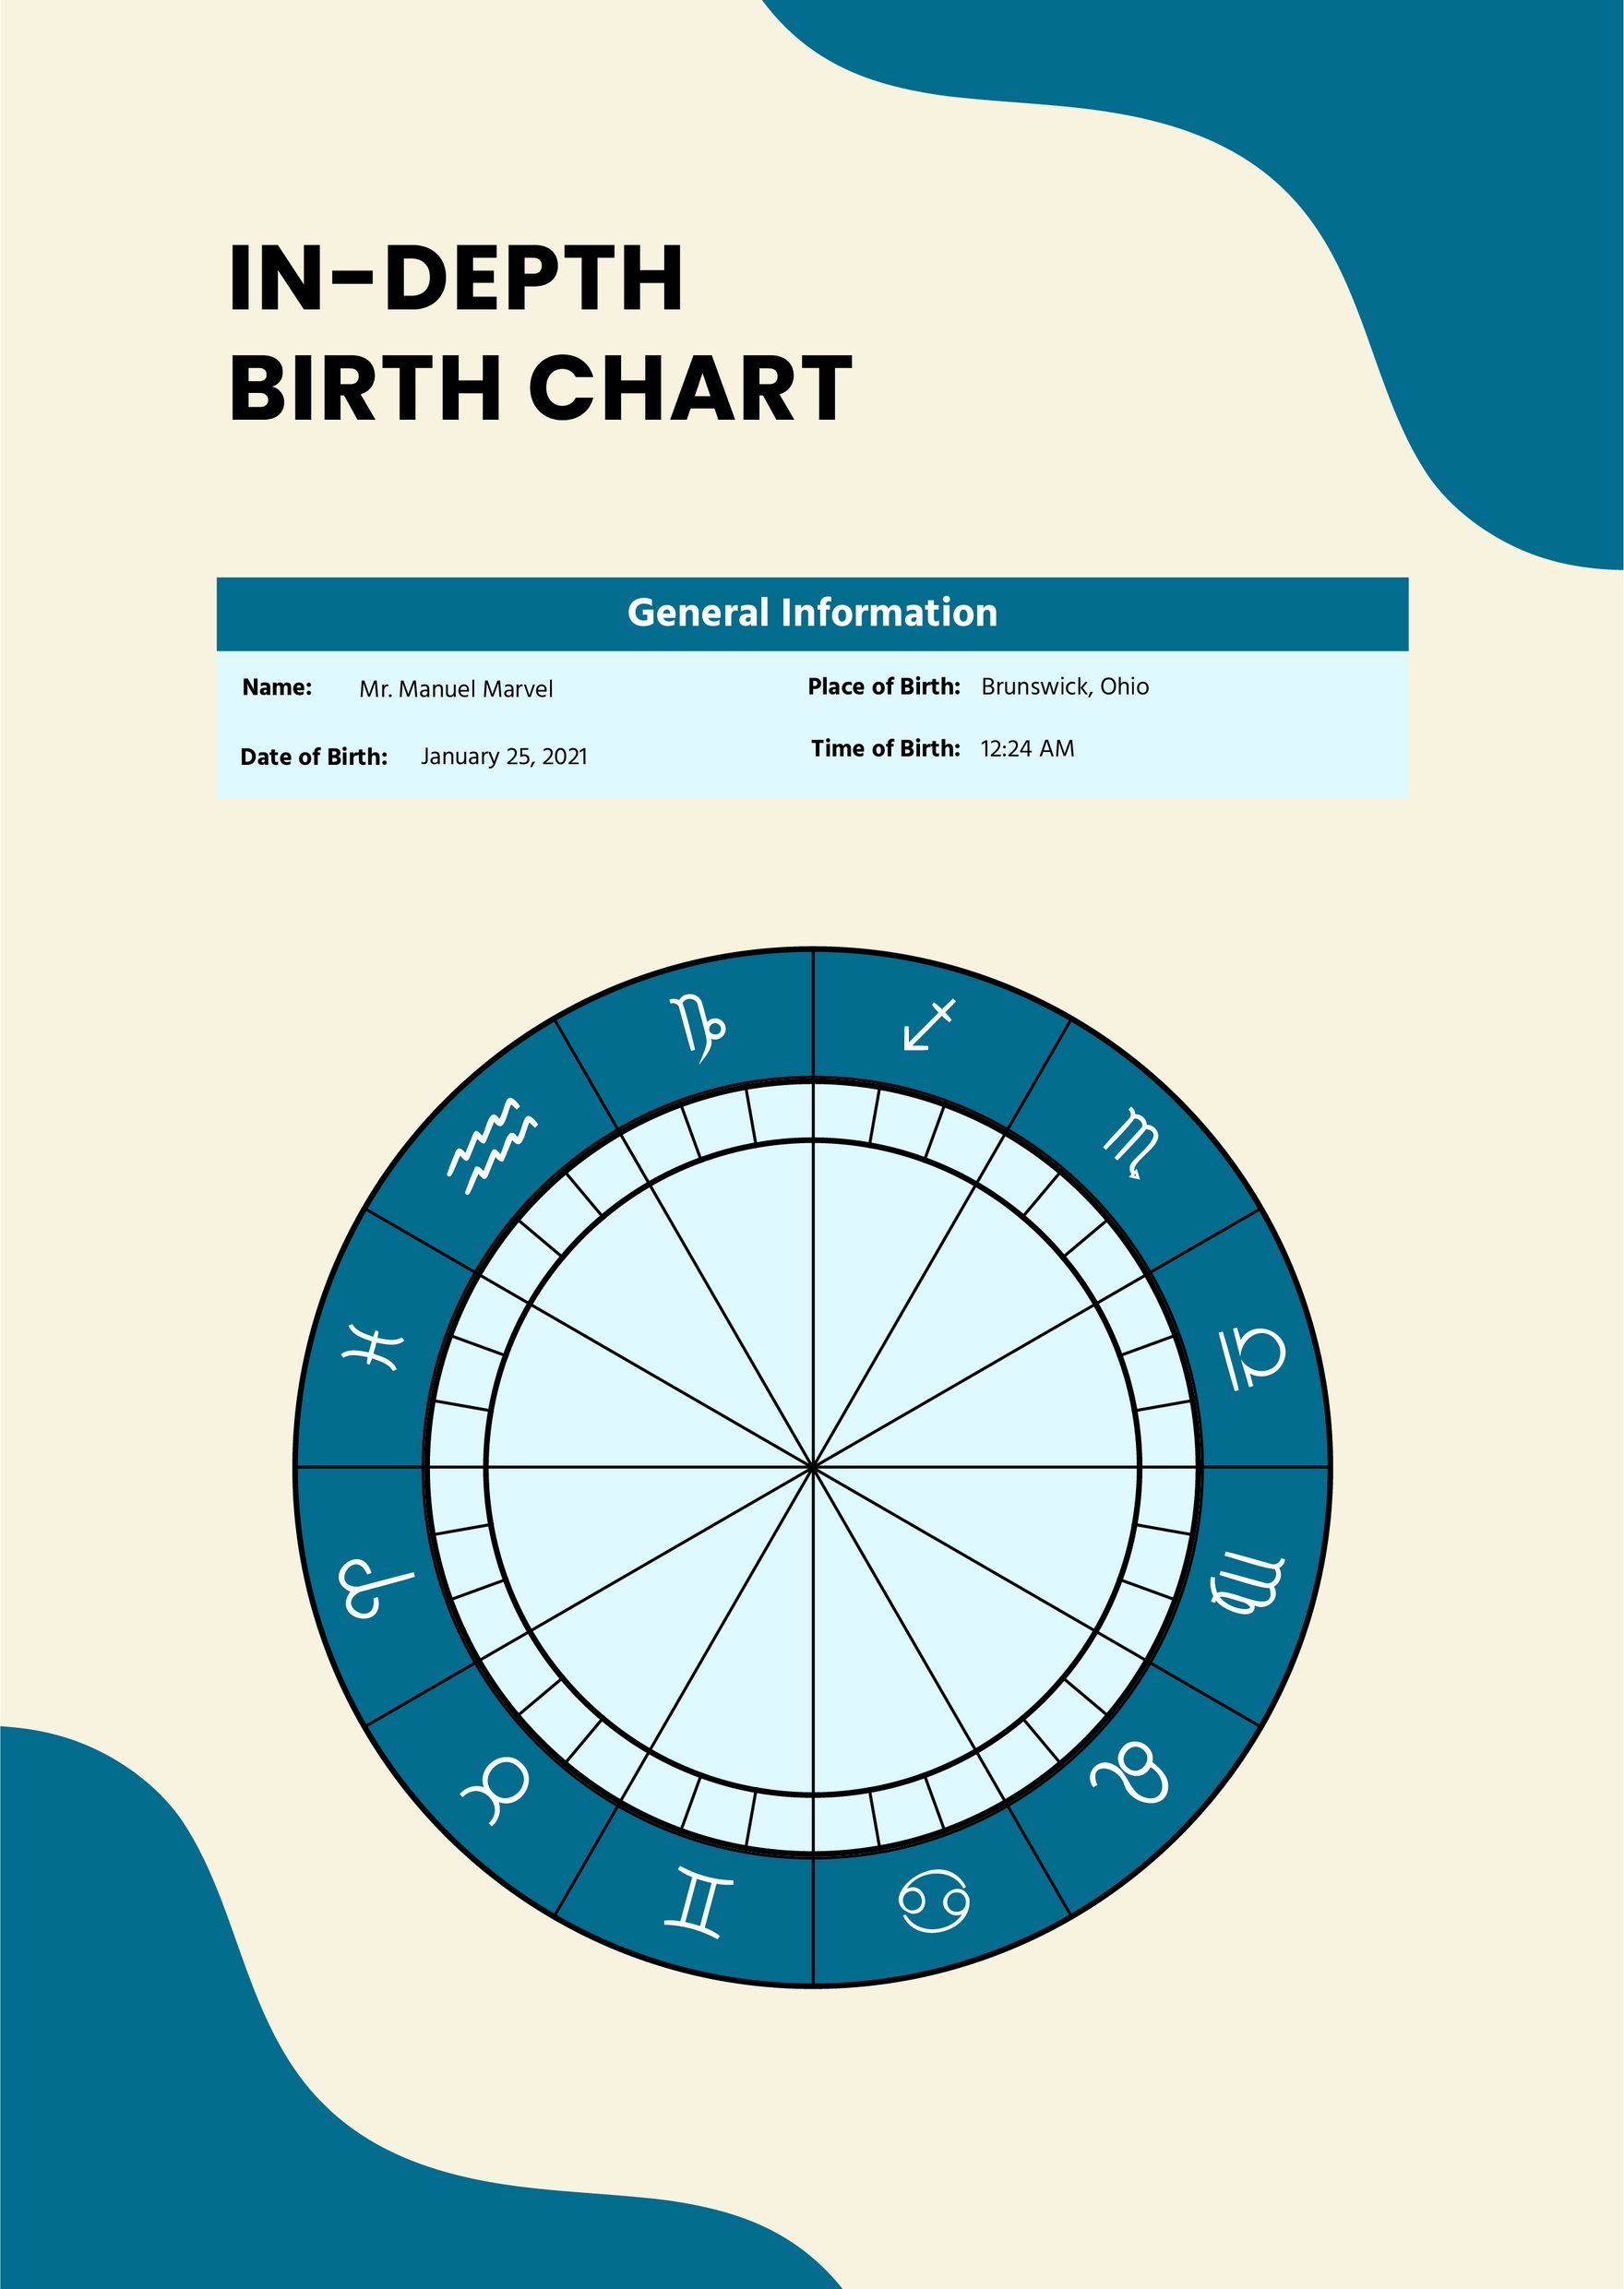 In-depth Birth Chart Template in PDF, Illustrator